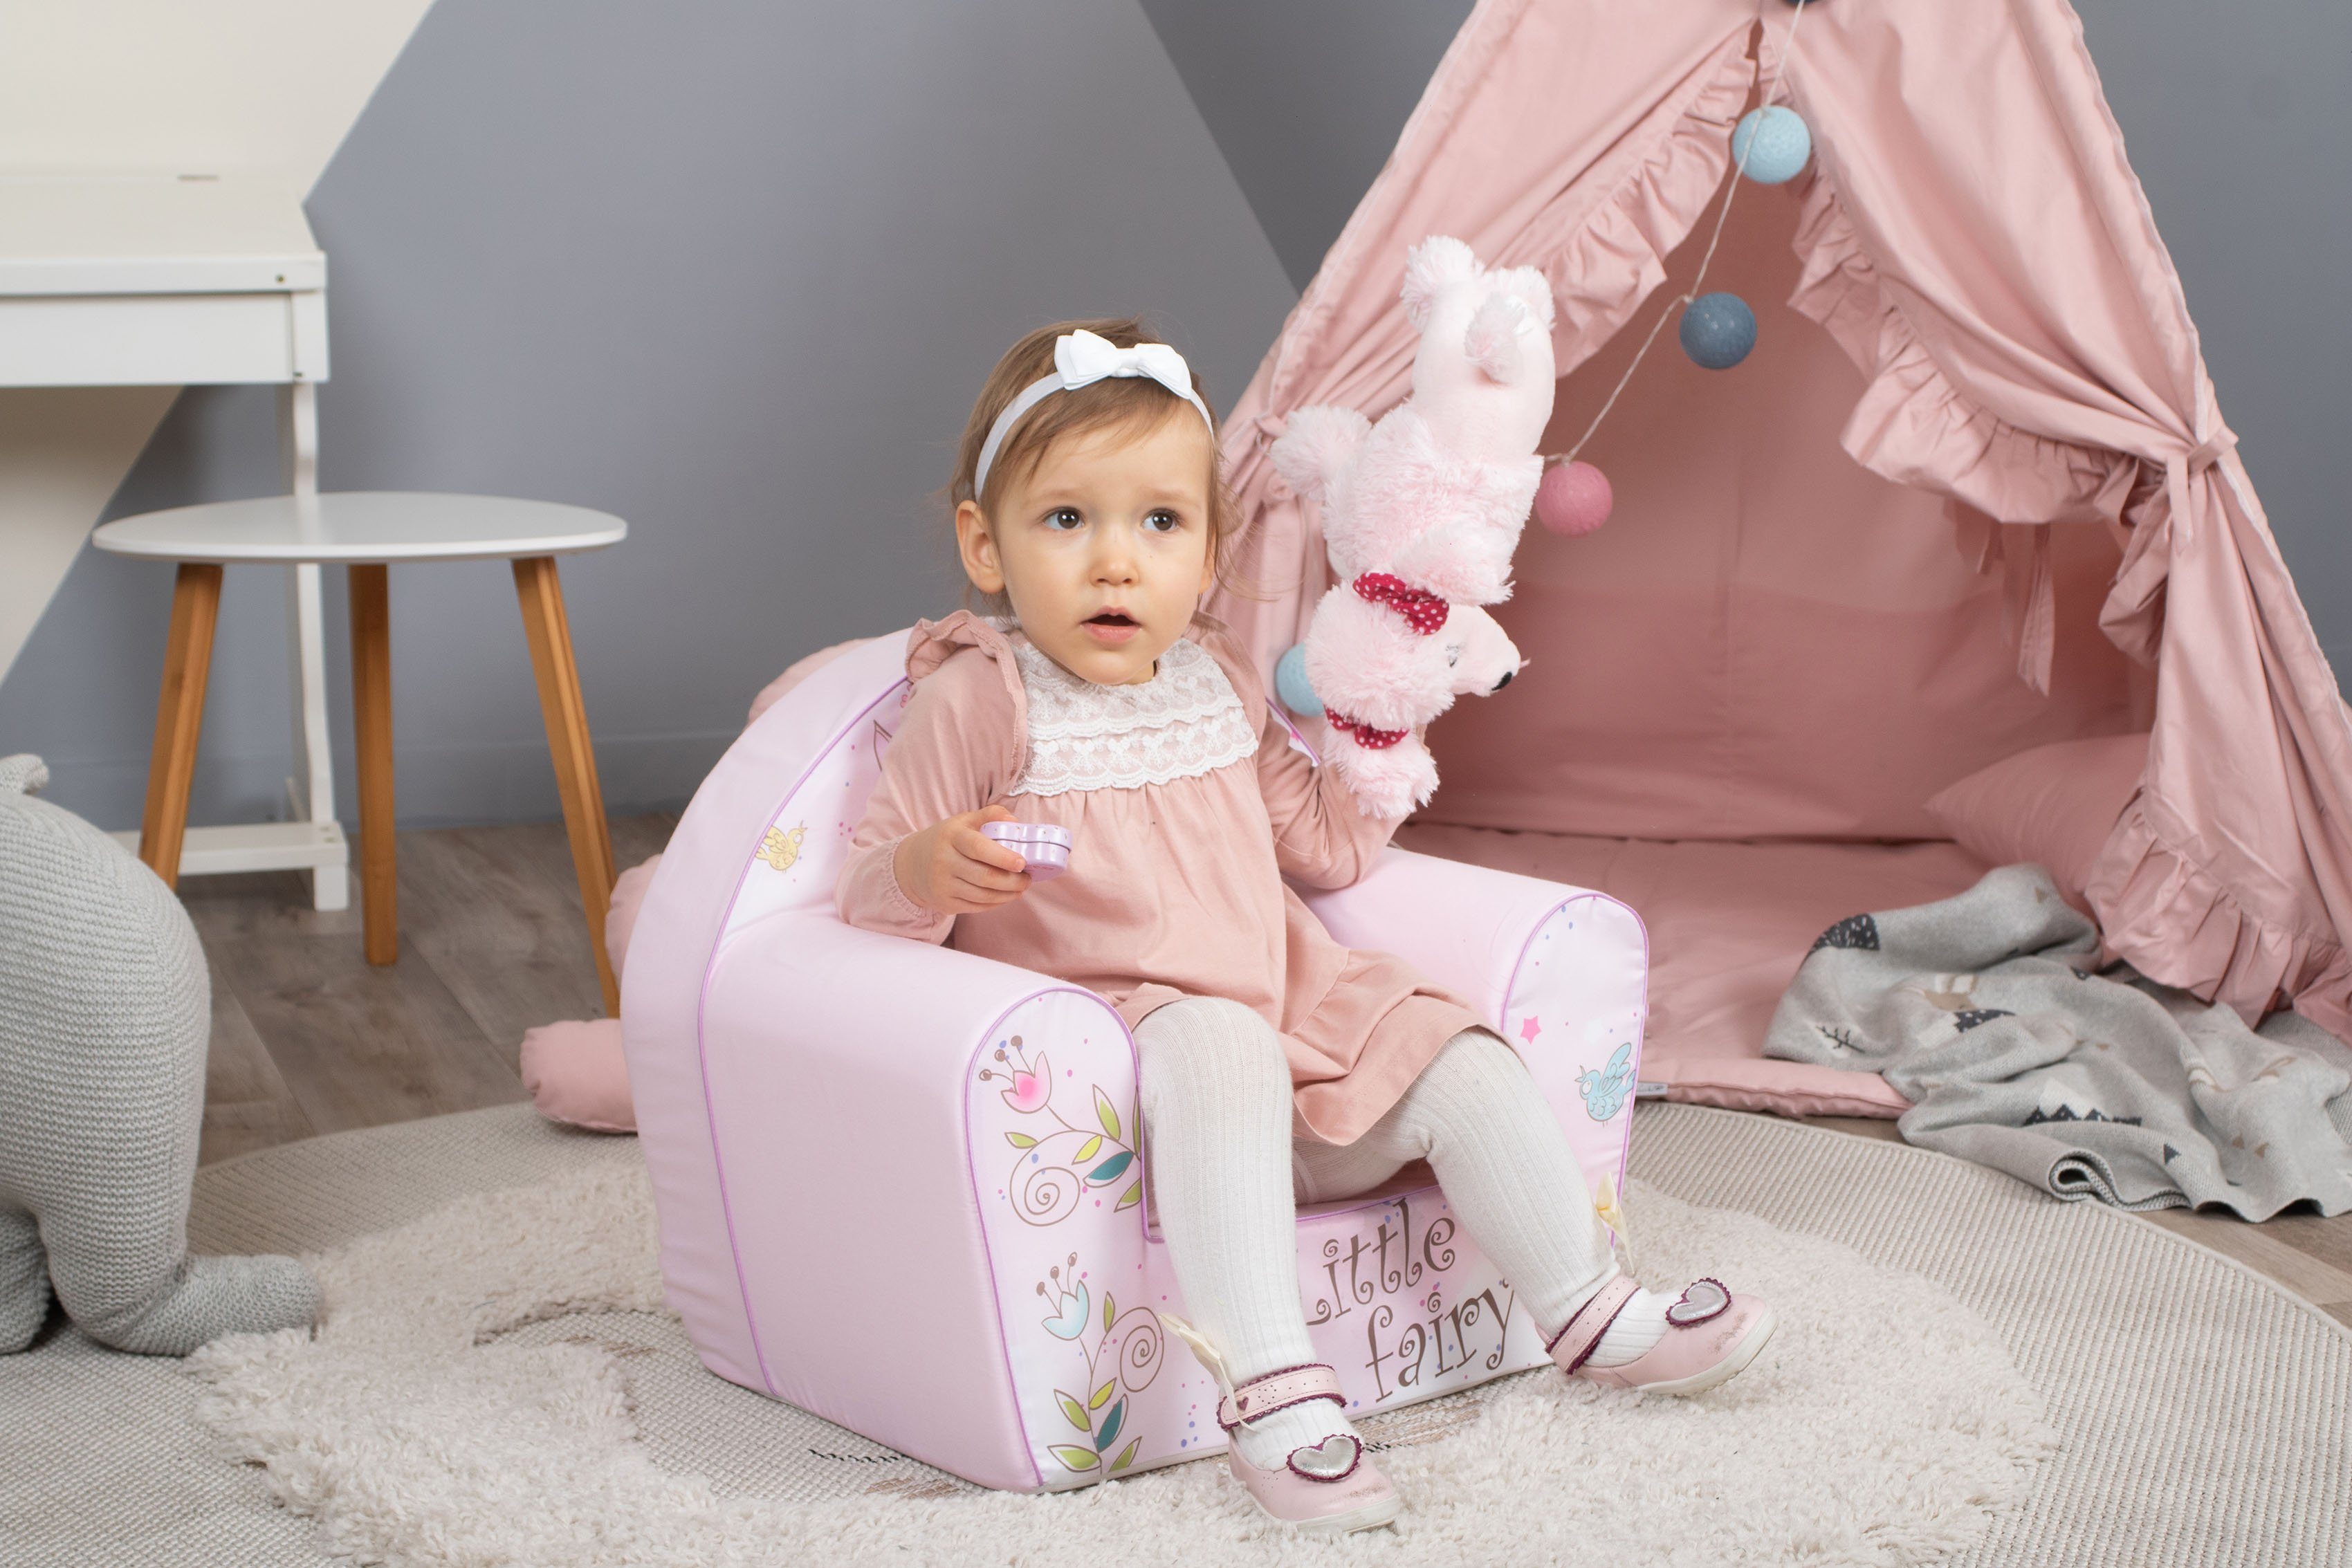 Knorrtoys® Sessel Little fairy, Kinder; für in Europe Made